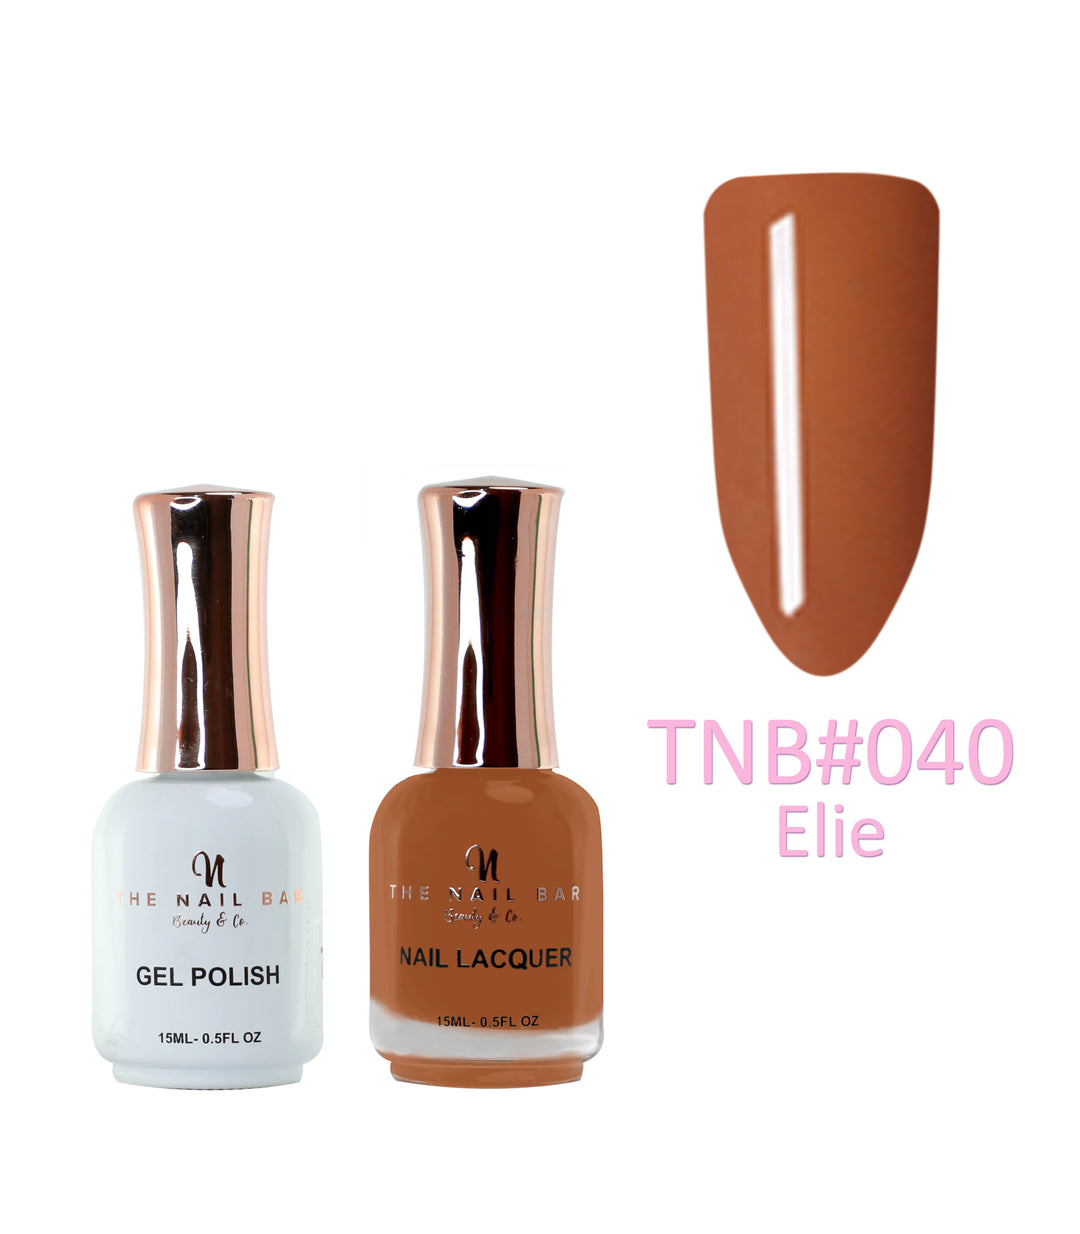 Dual Polish/Gel colour matching (15ml) - Elie - The Nail Bar Beauty & Co.